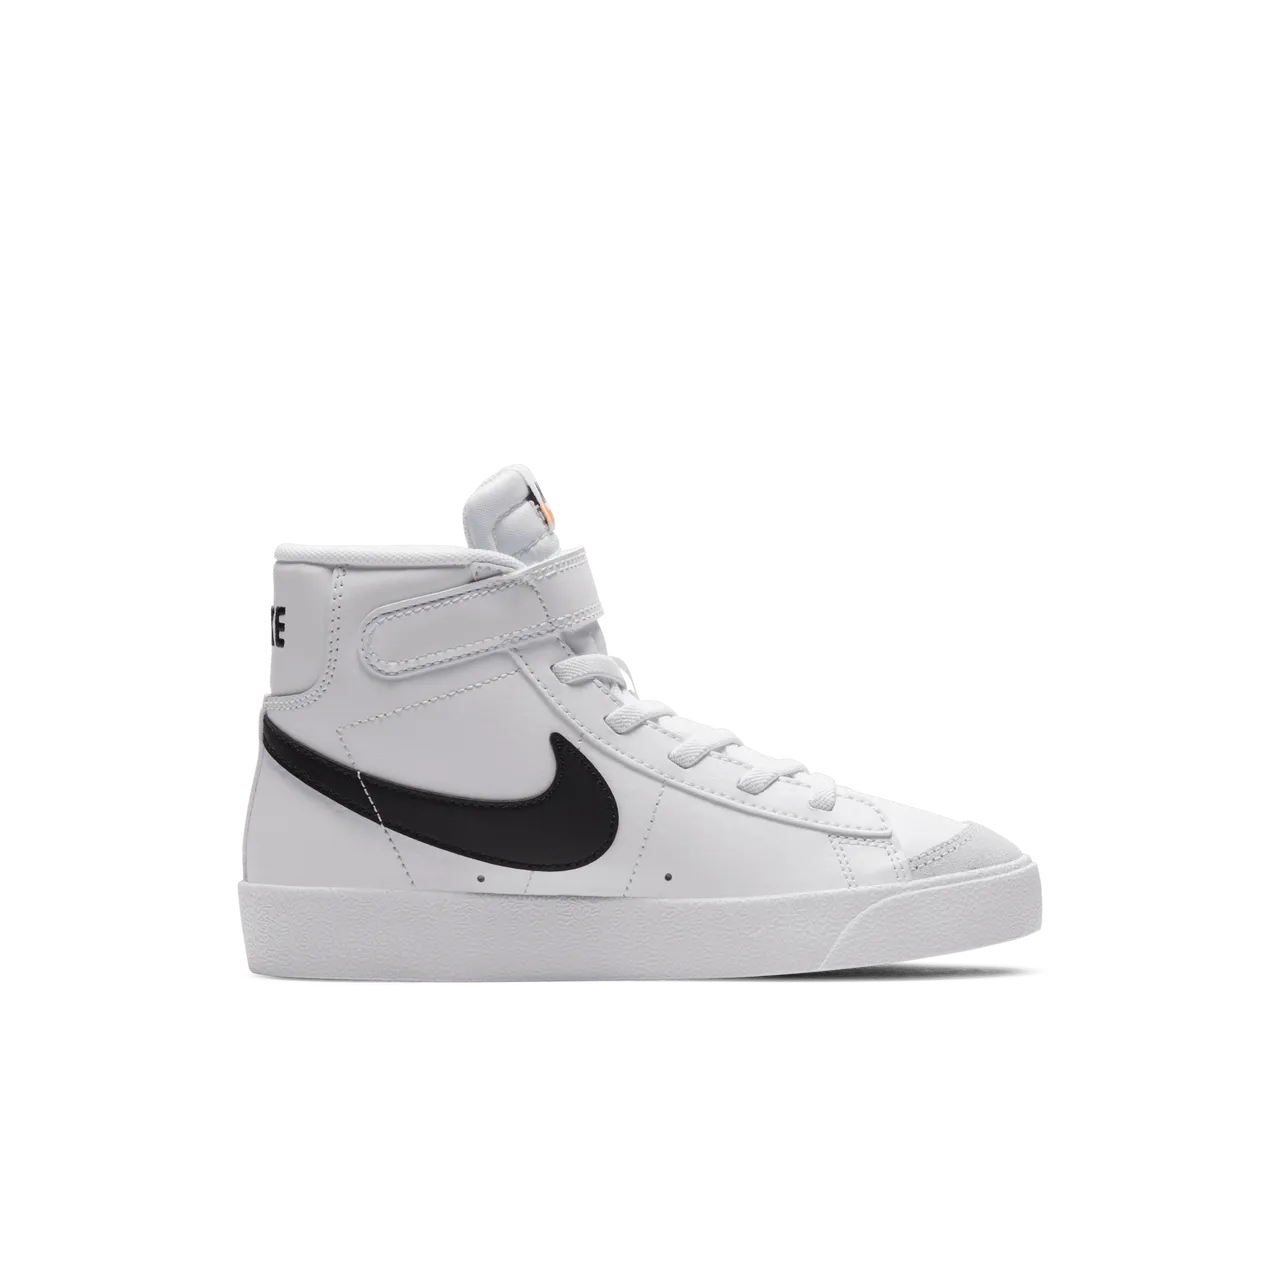 Nike Blazer Mid '77 Younger Kids' Shoe - White